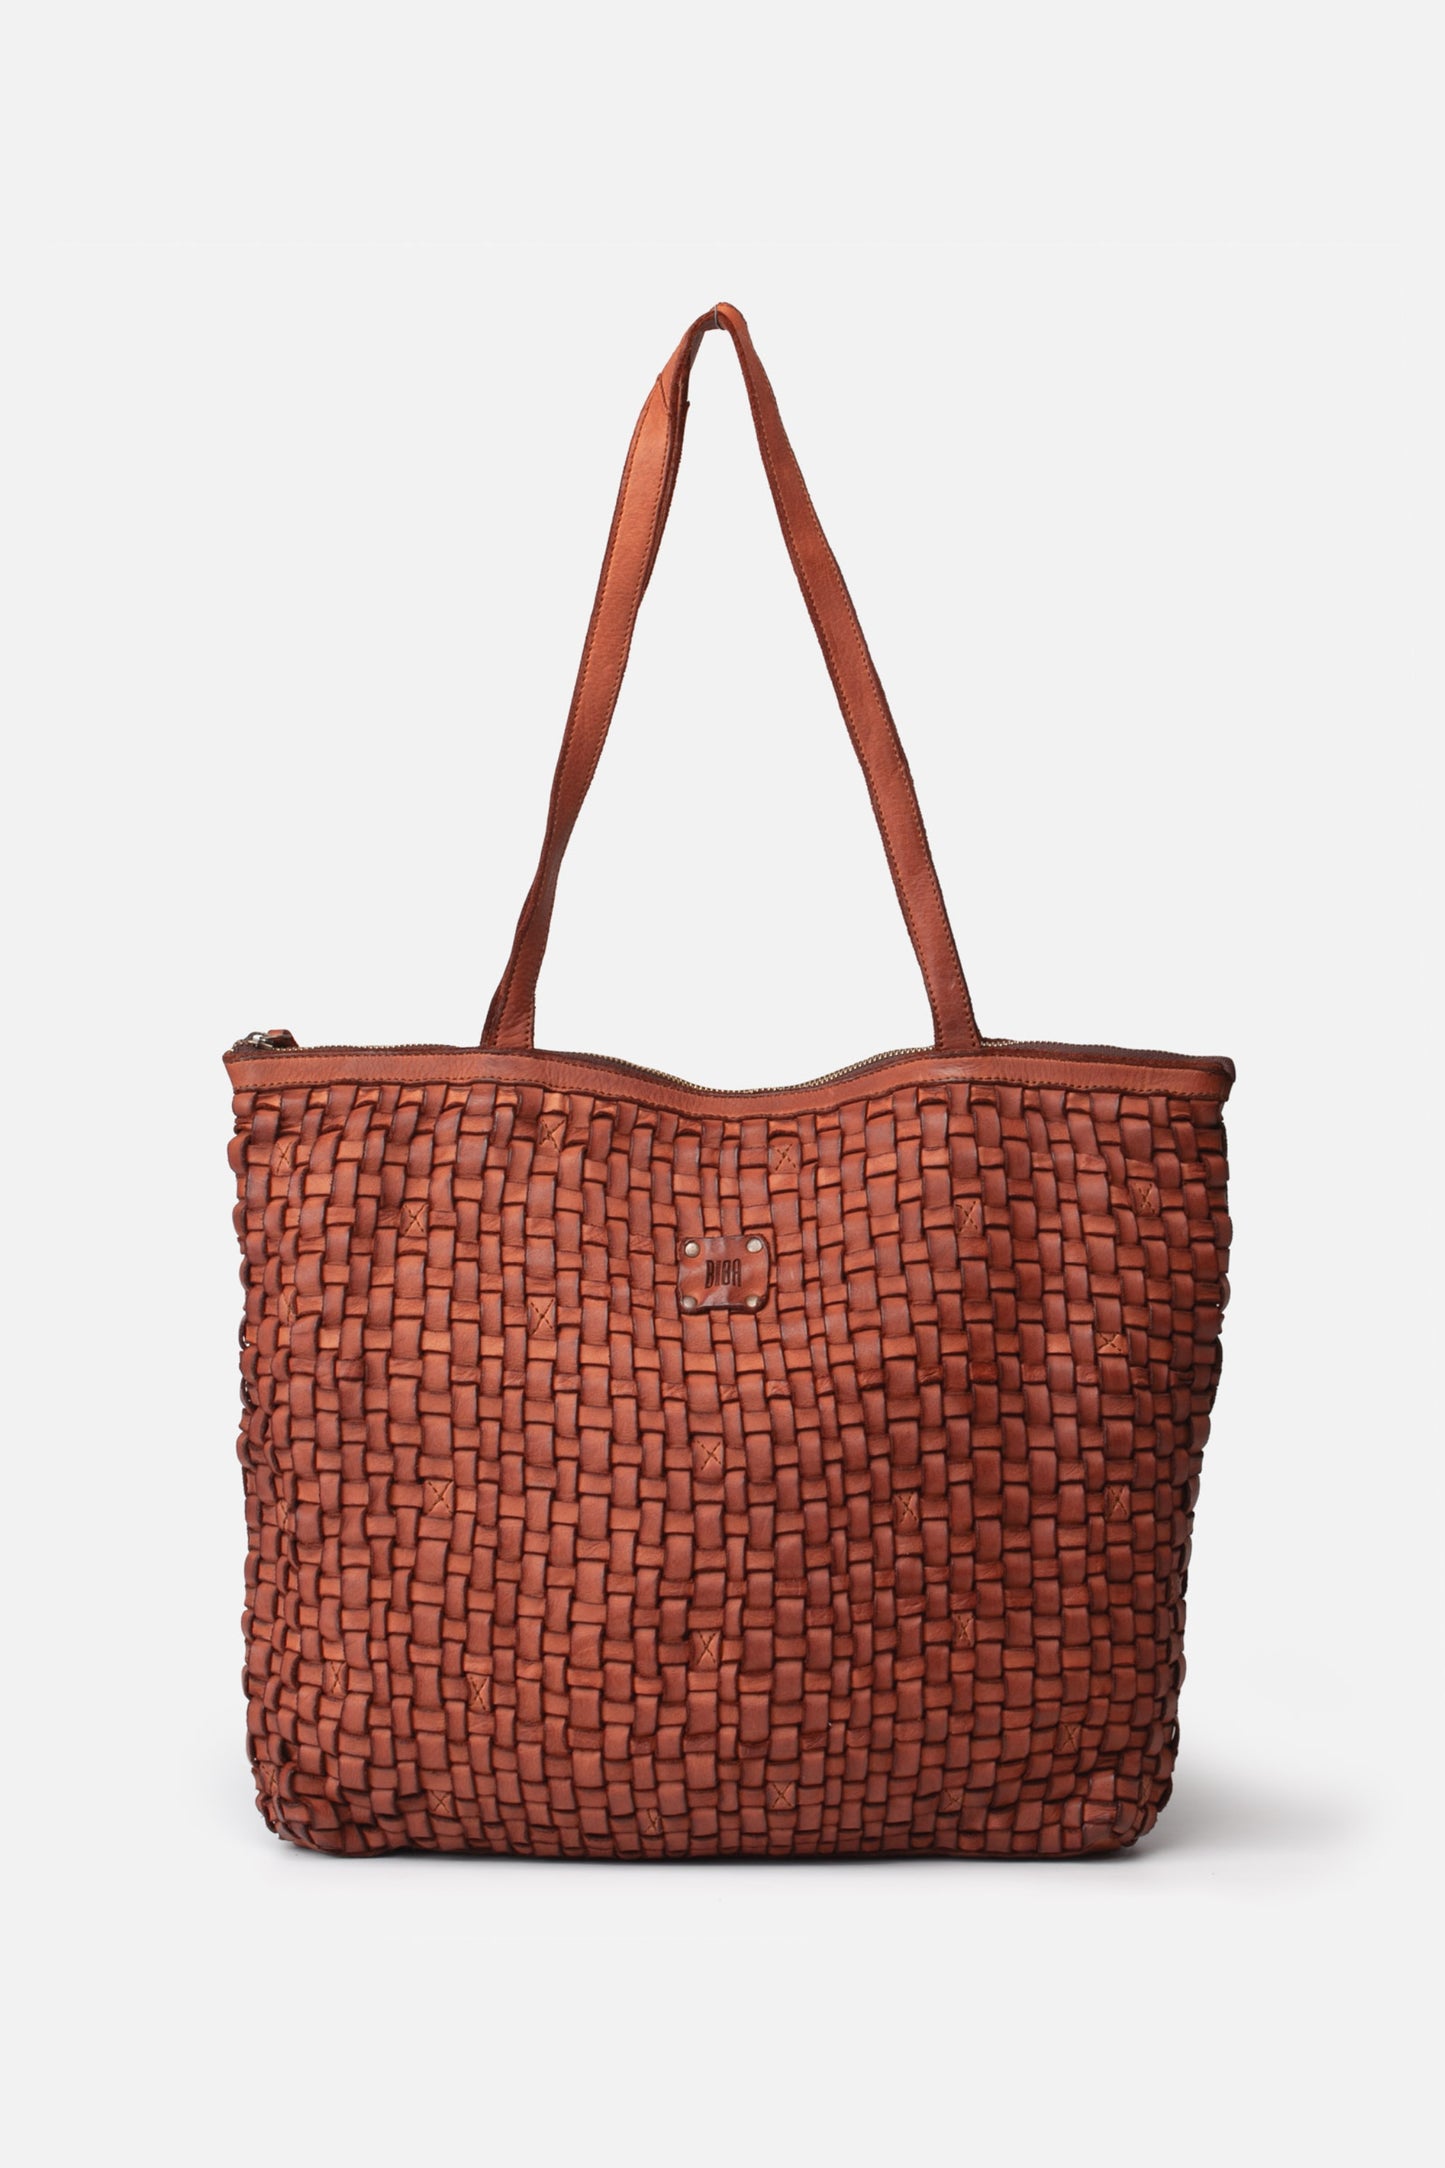 KANSAS - Braided Leather Bag